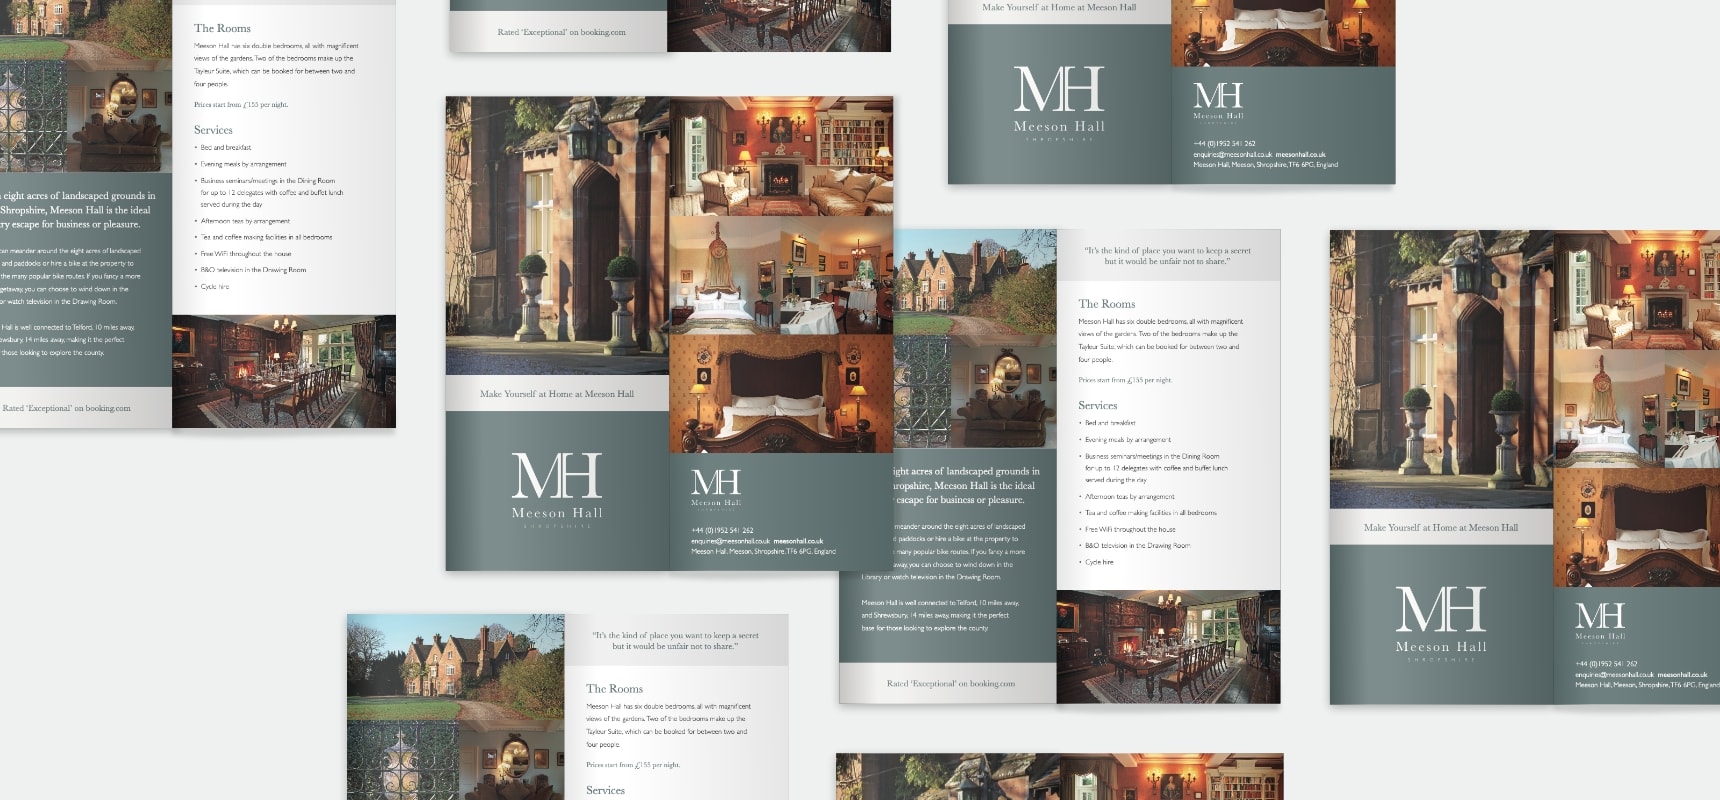 Meeson Hall DL brochure designs